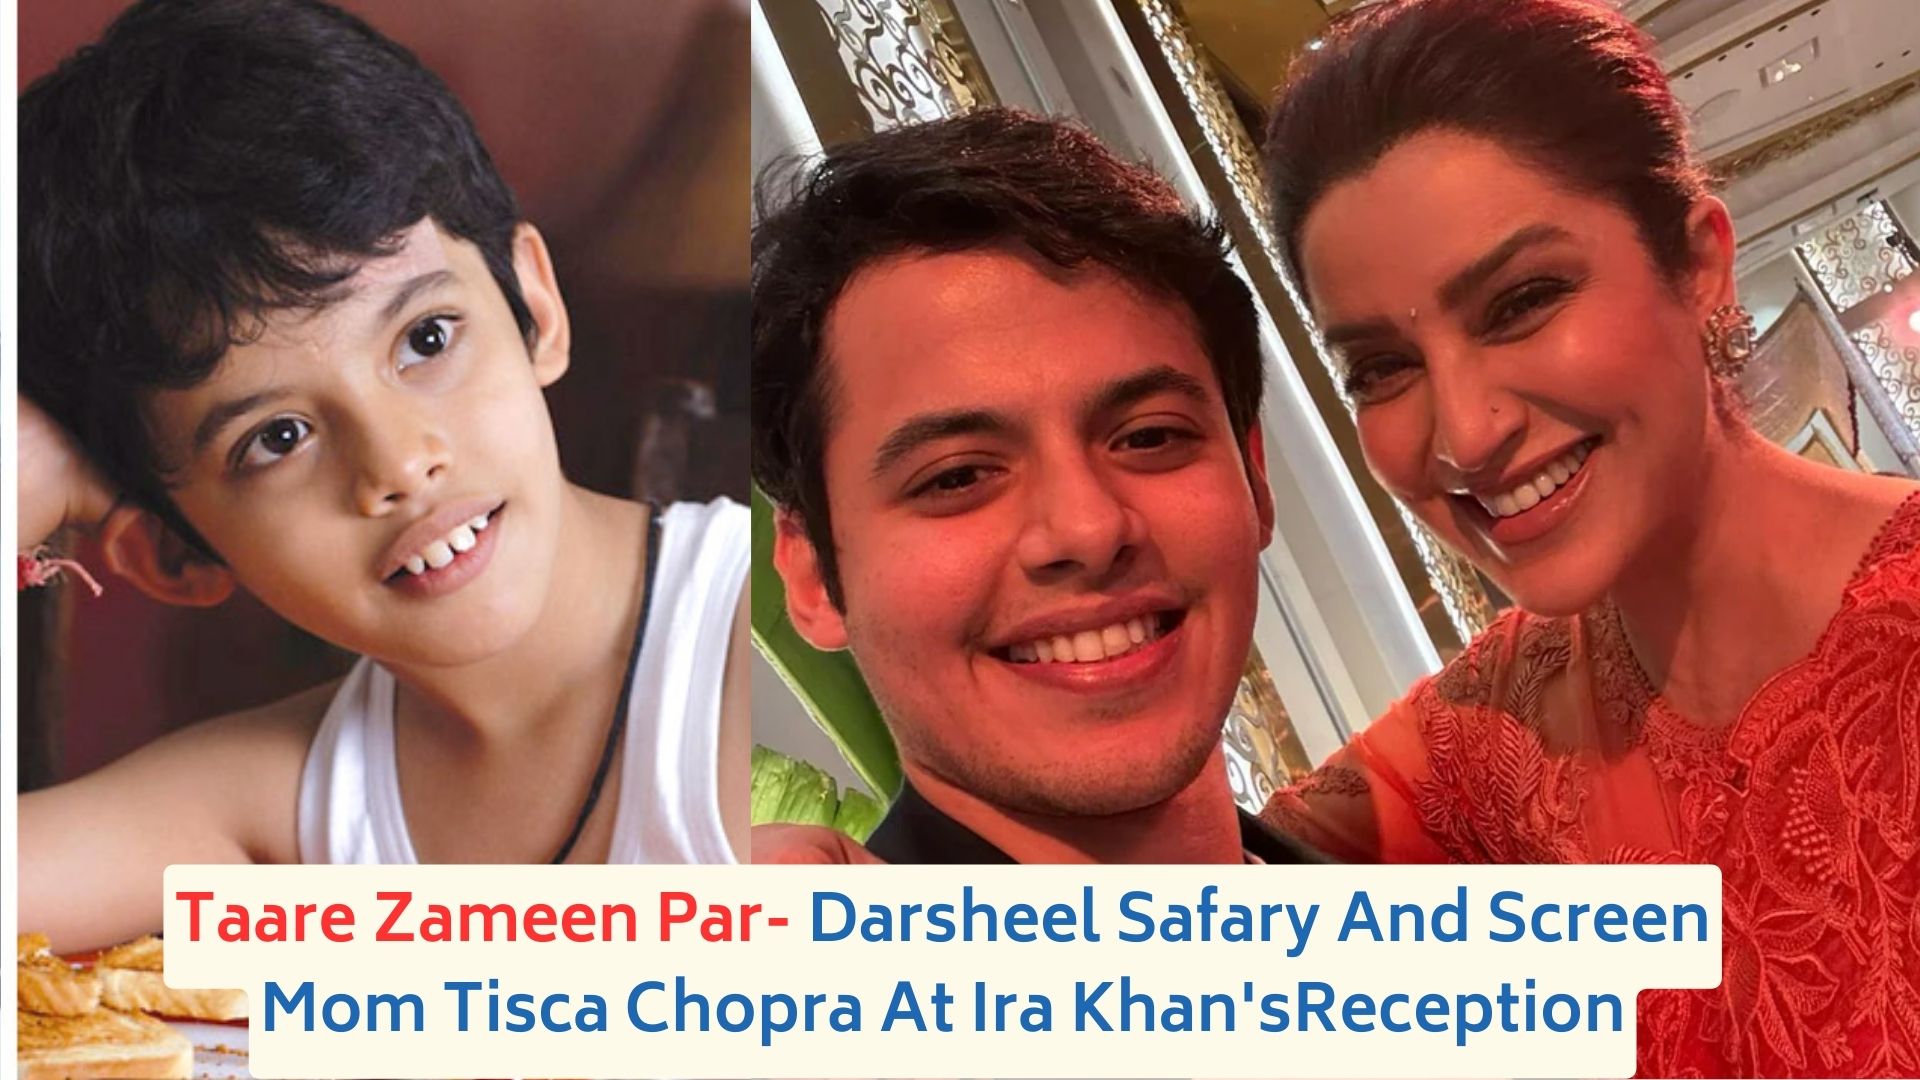 Taare Zameen Par- Darsheel Safary And Screen Mom Tisca Chopra At Ira Khan's Reception